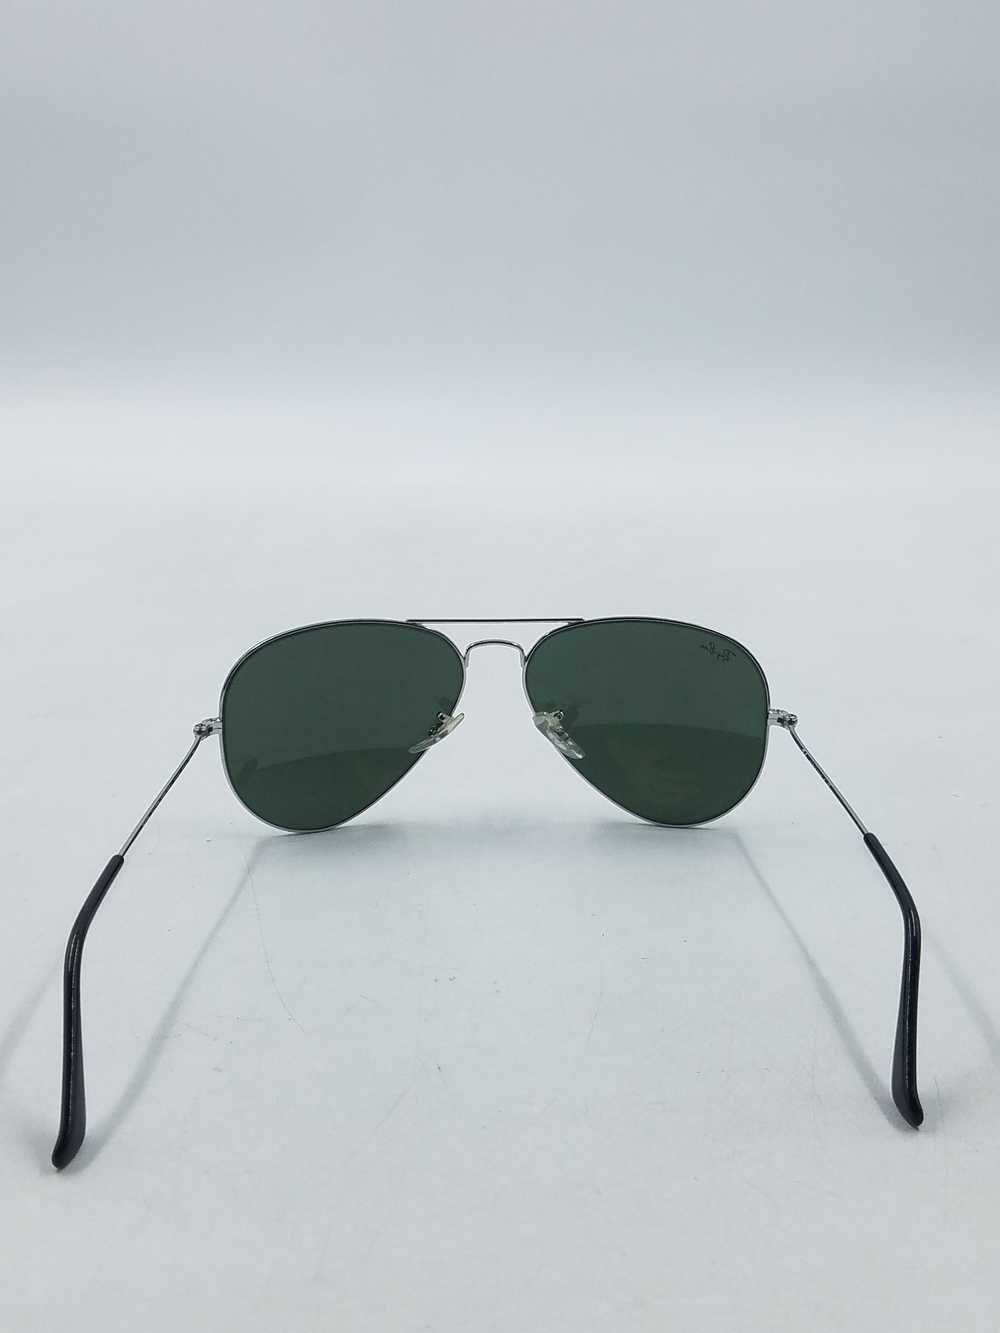 Ray-Ban Silver Aviator Large Sunglasses - image 3